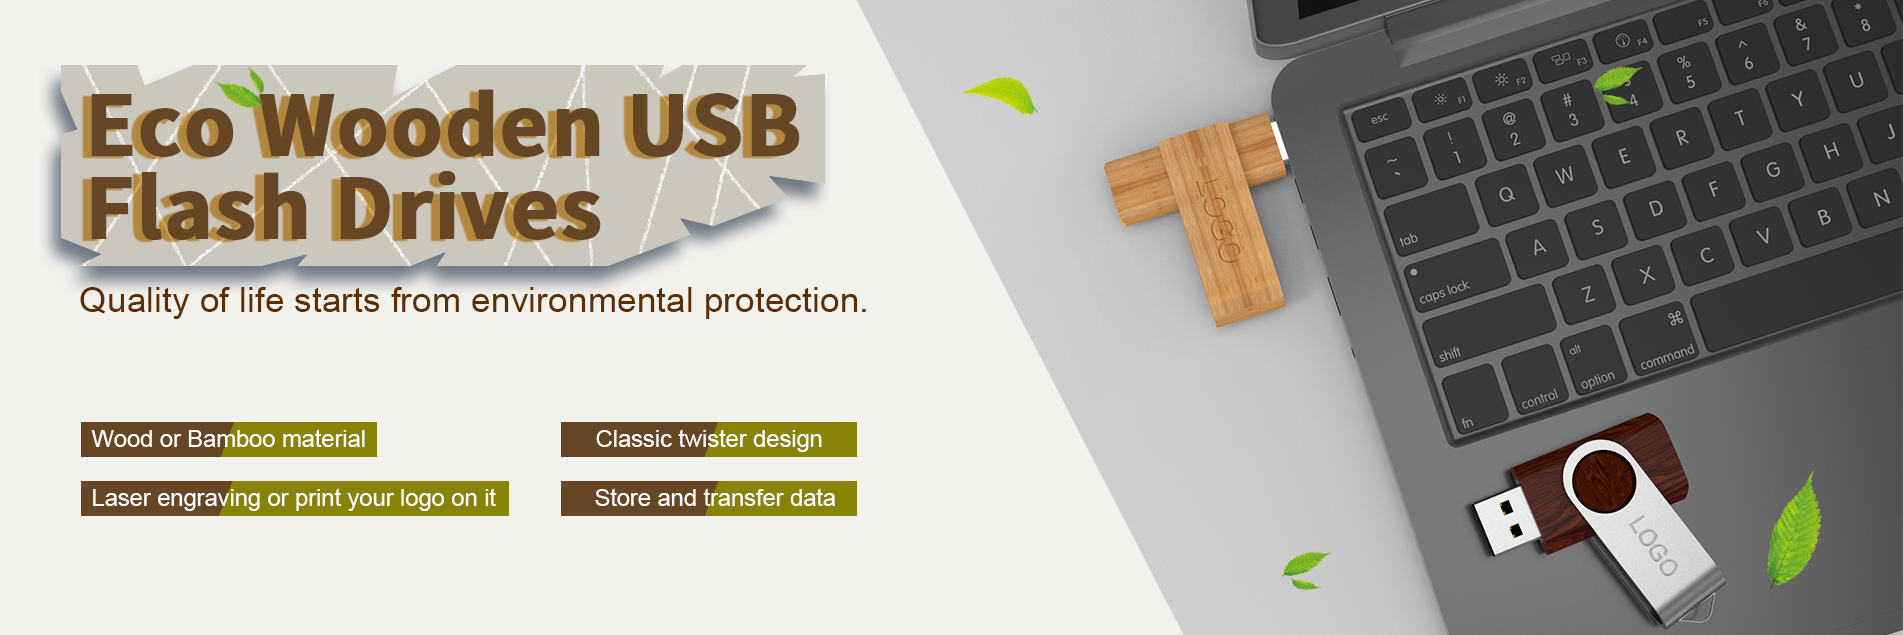 Wooden USB flash drives